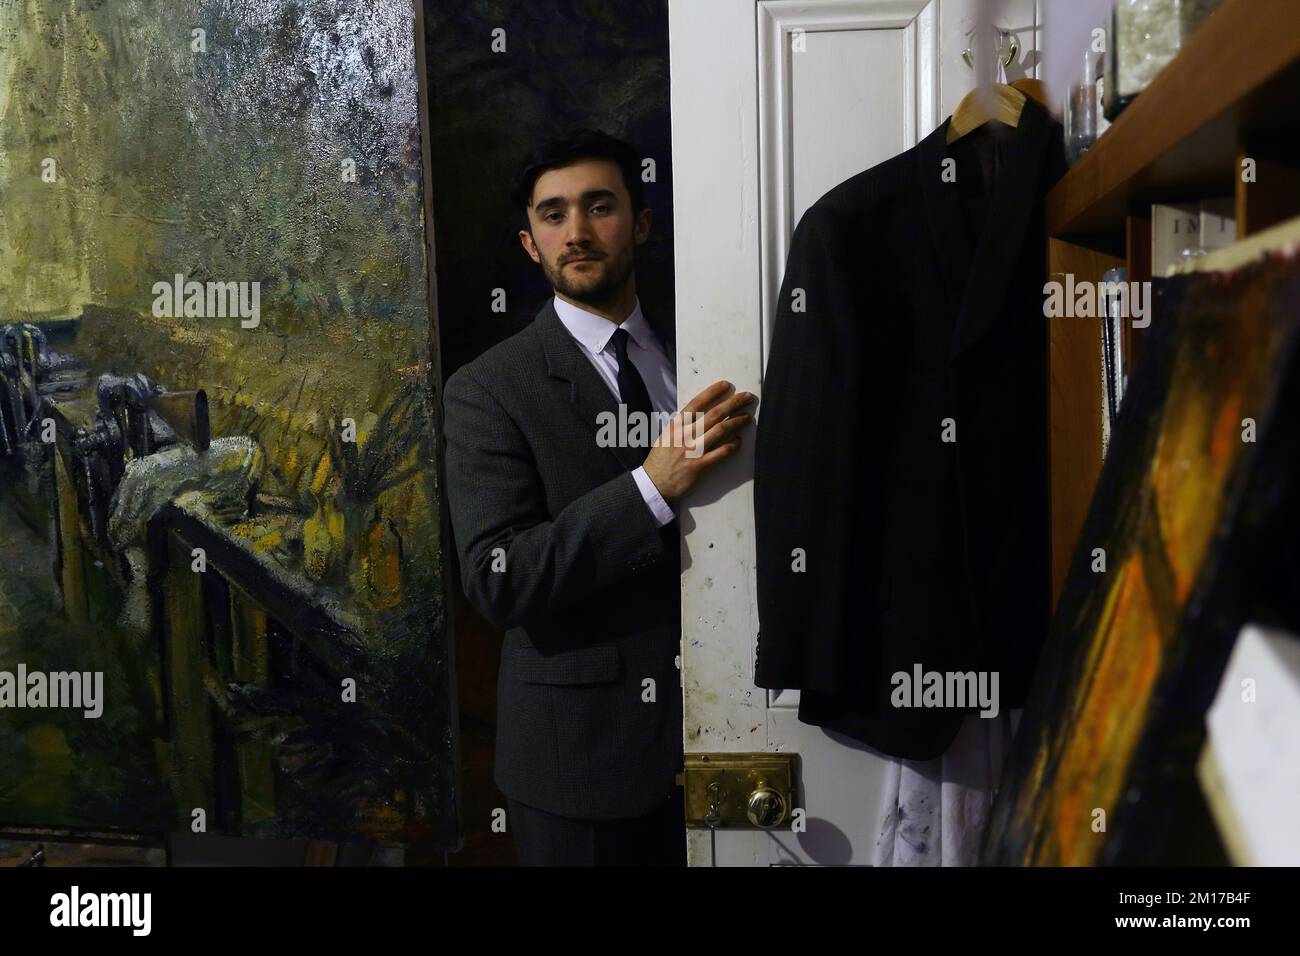 Elegant man dressed in suit opening door of artist studio with oil painting in background. Stock Photo